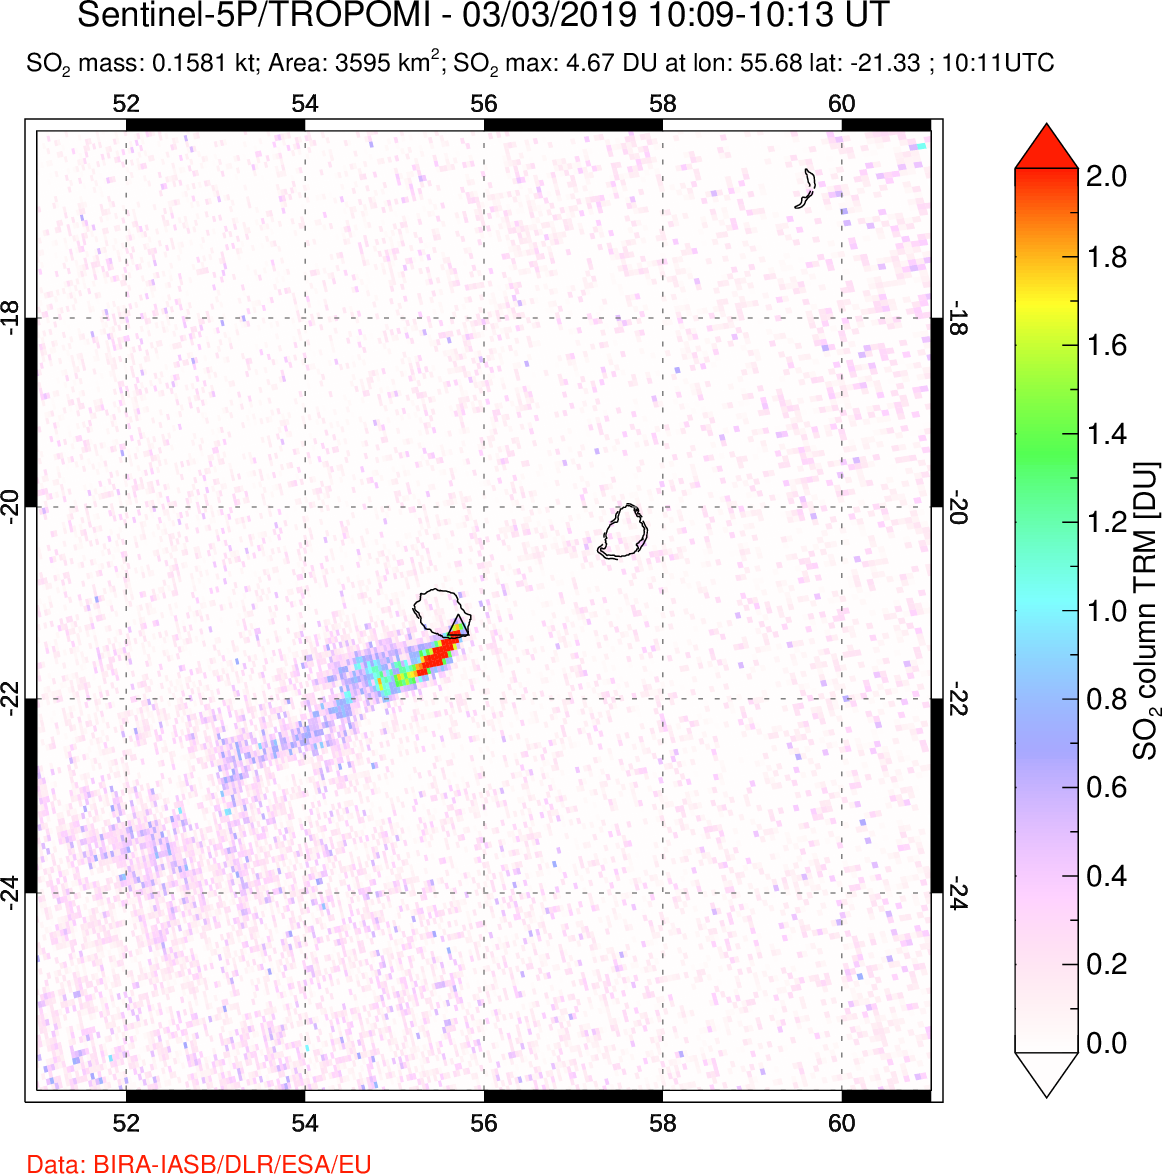 A sulfur dioxide image over Reunion Island, Indian Ocean on Mar 03, 2019.